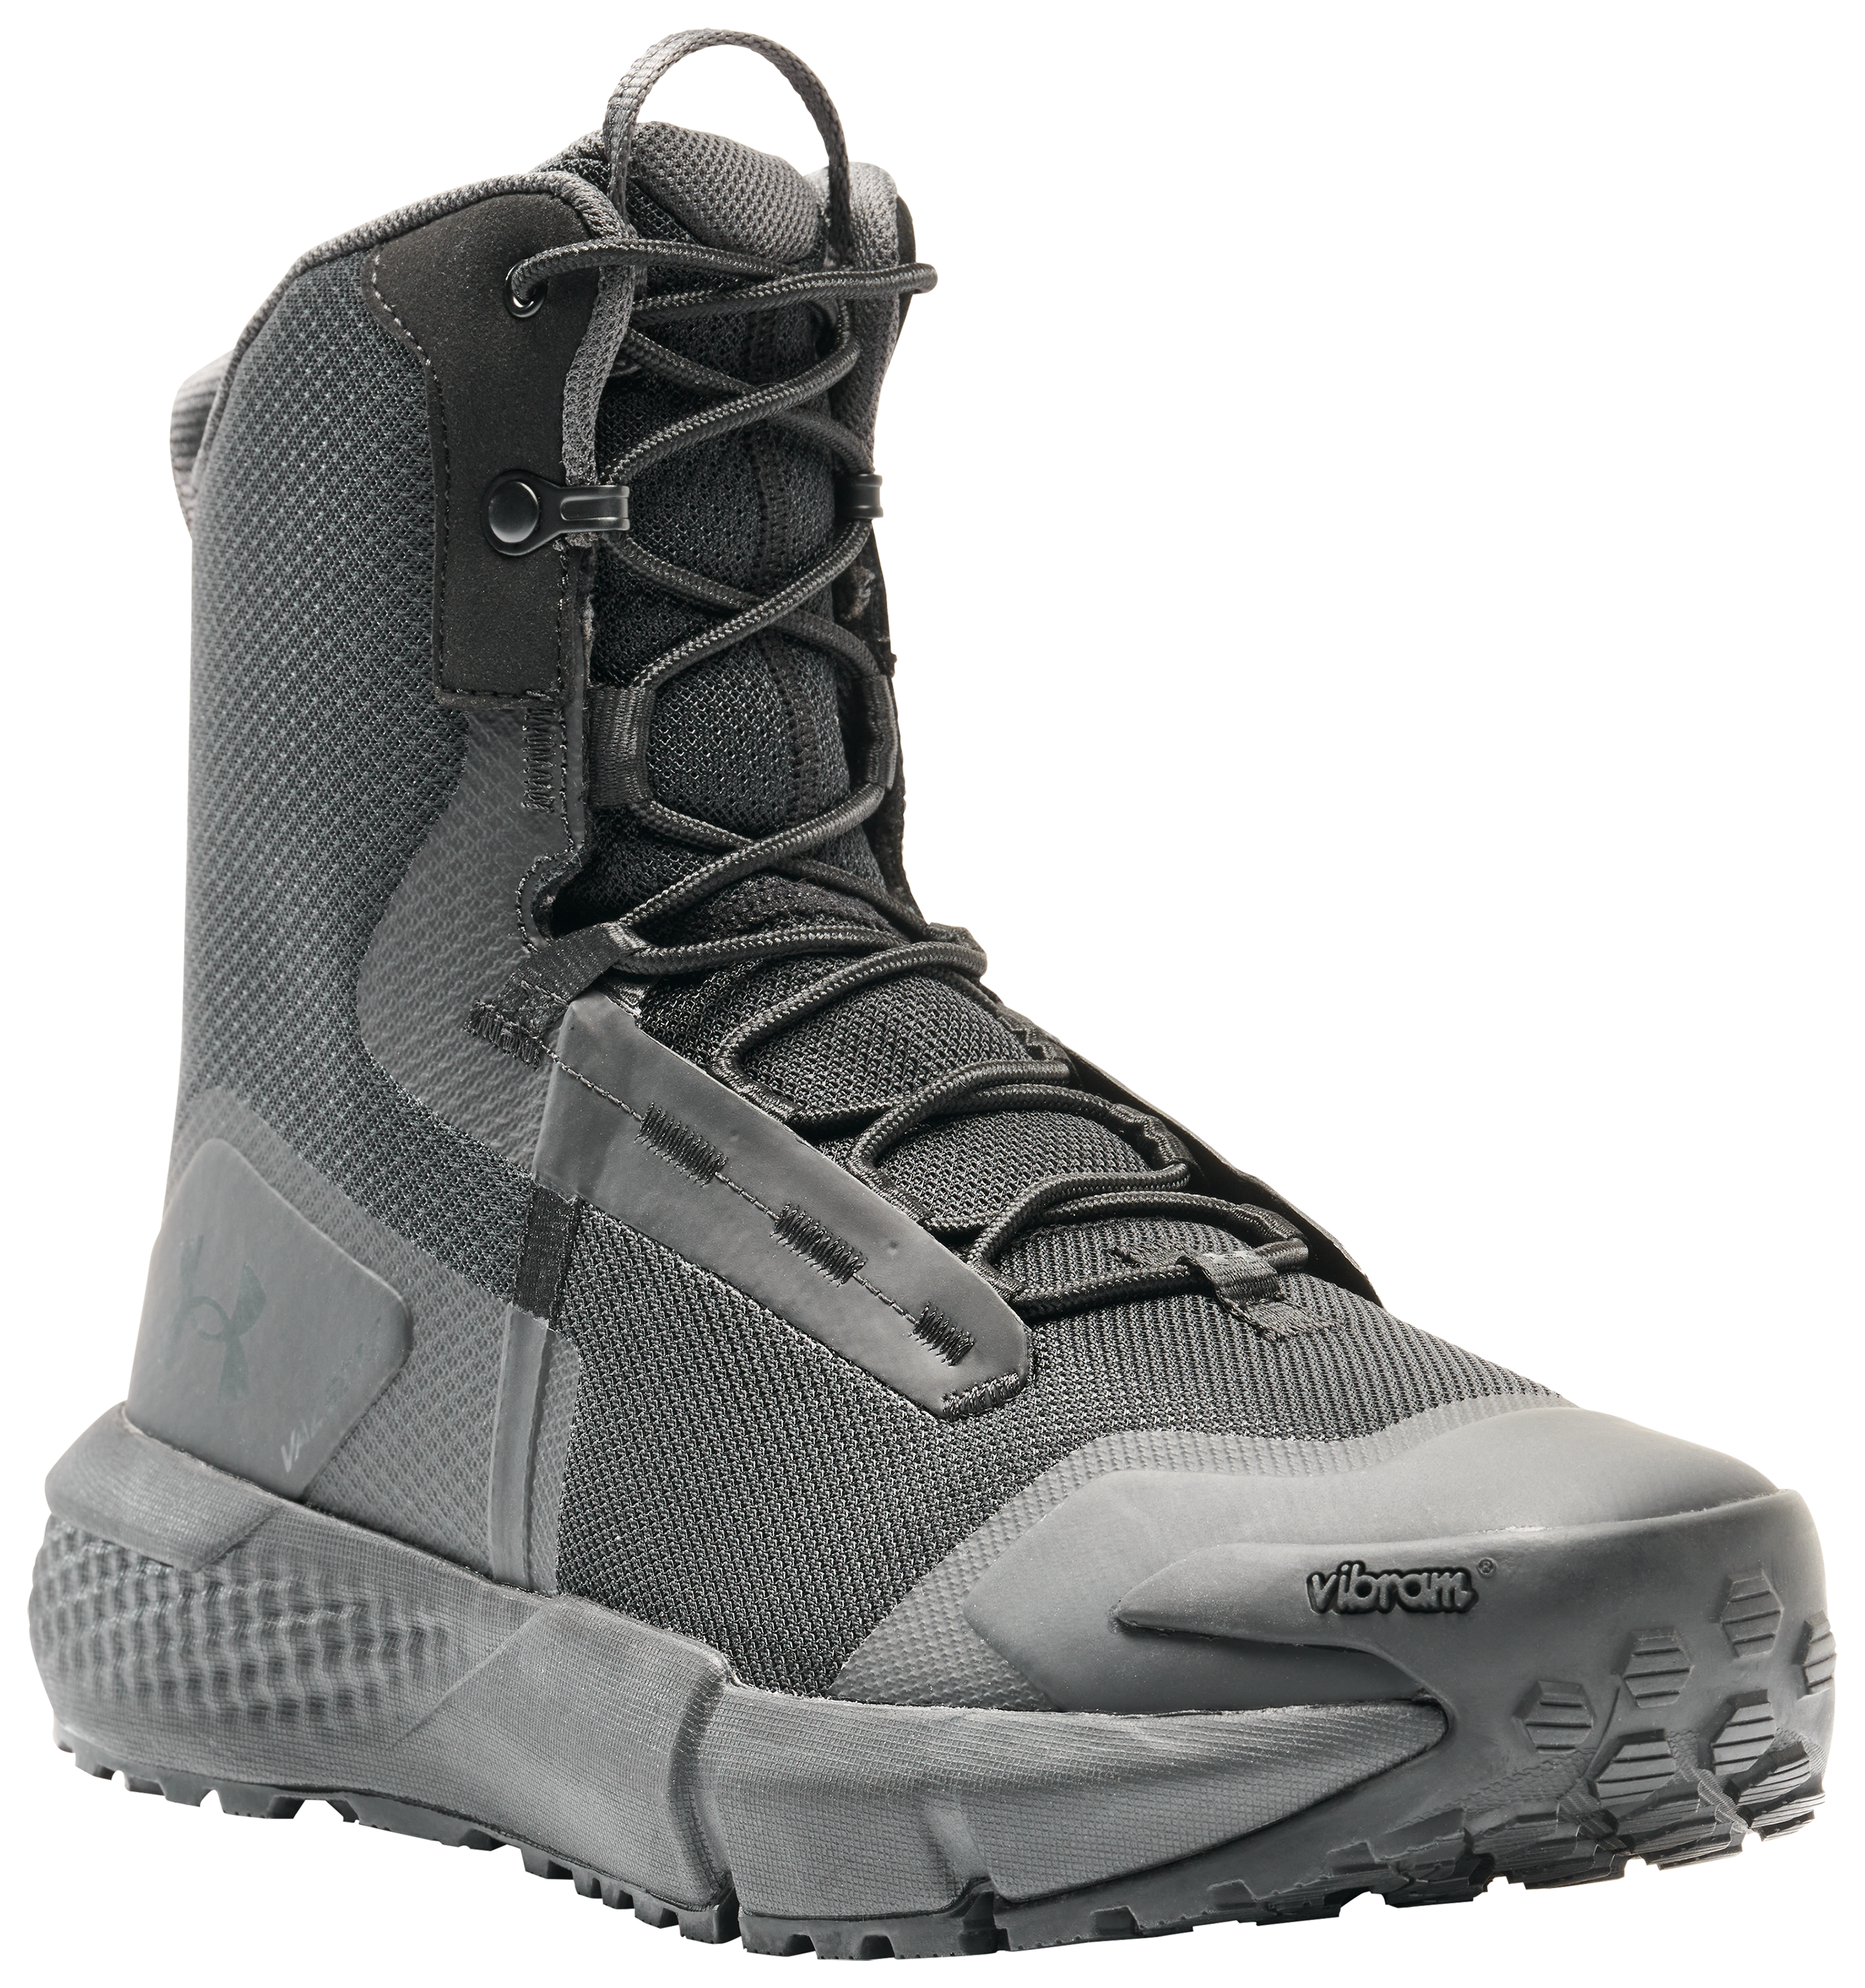 Under Armour Valsetz Side Zip Tactical Boots for Men - Black - 12M